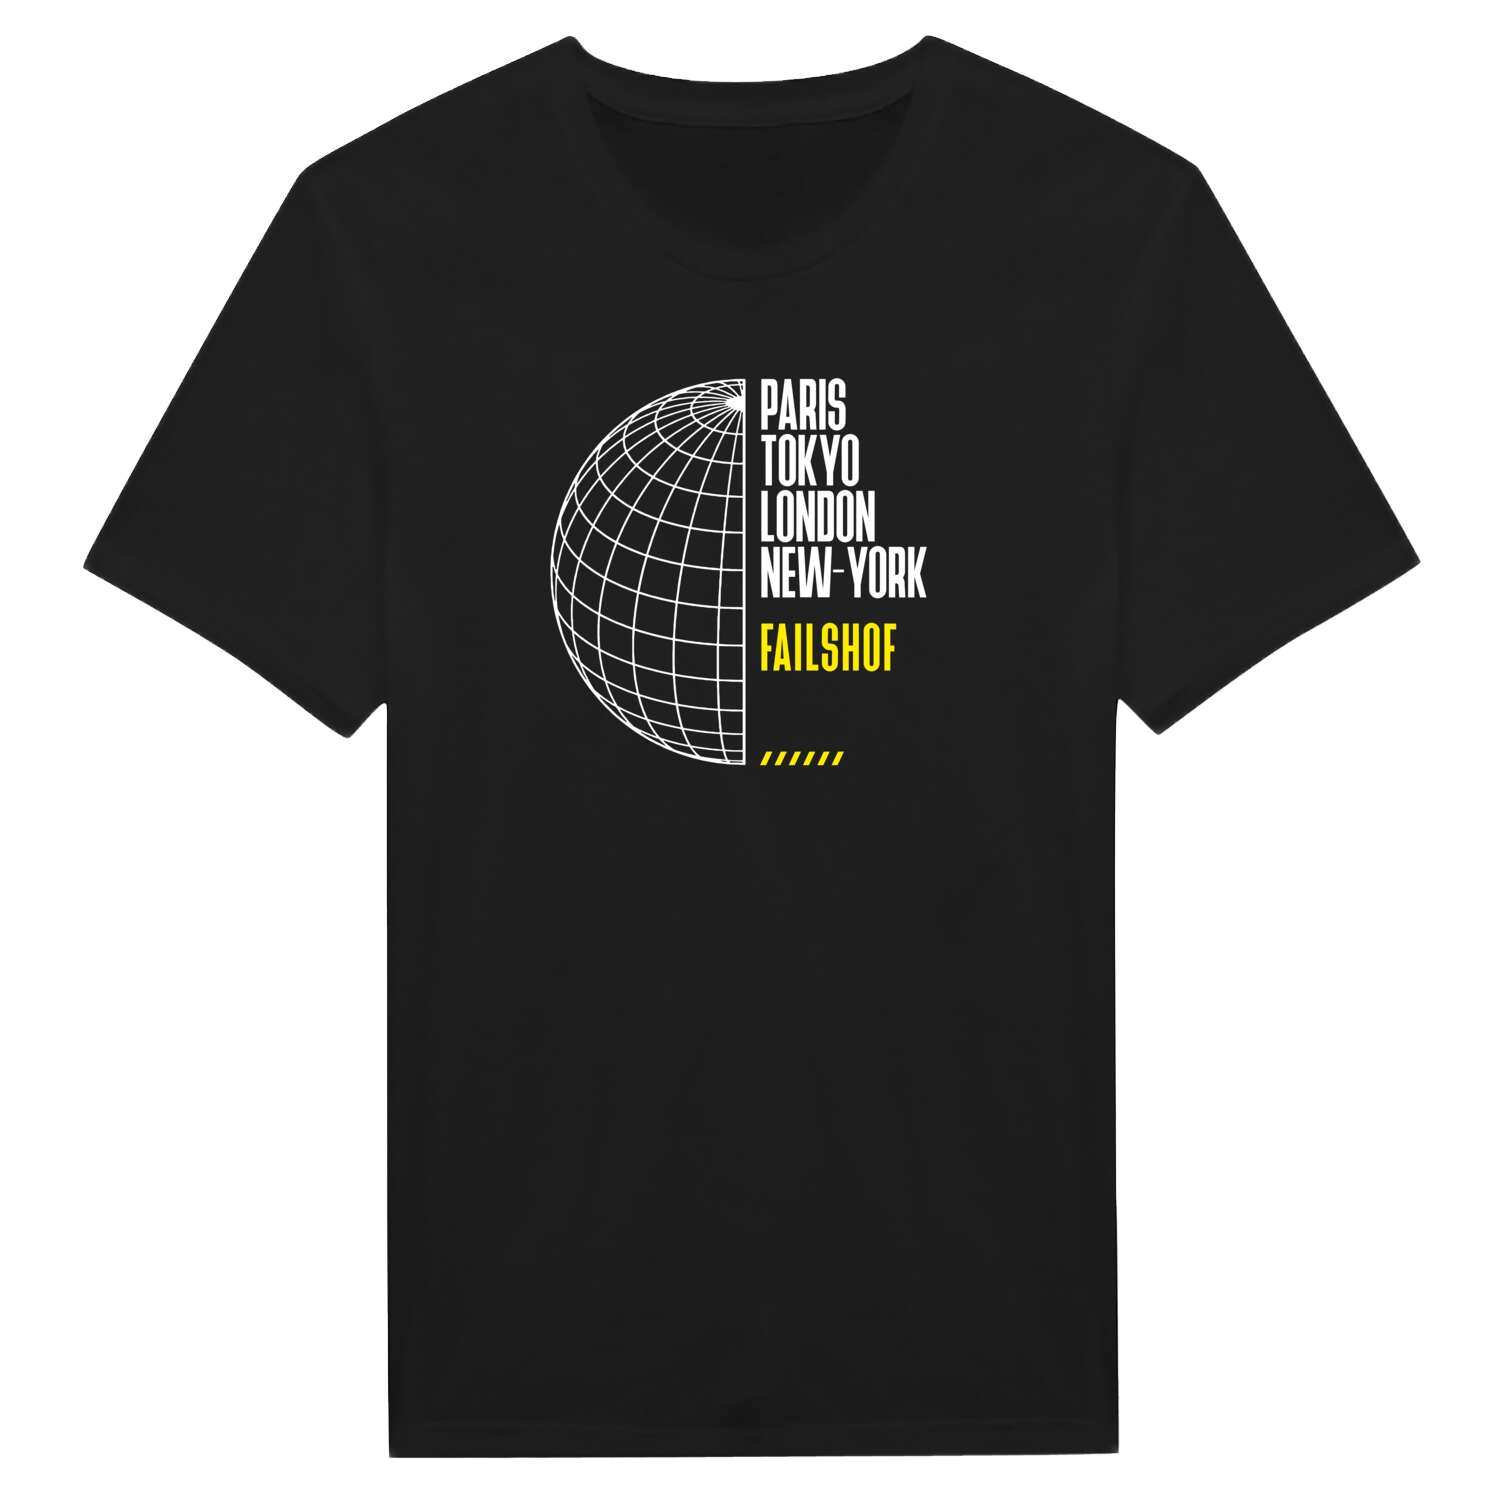 Failshof T-Shirt »Paris Tokyo London«